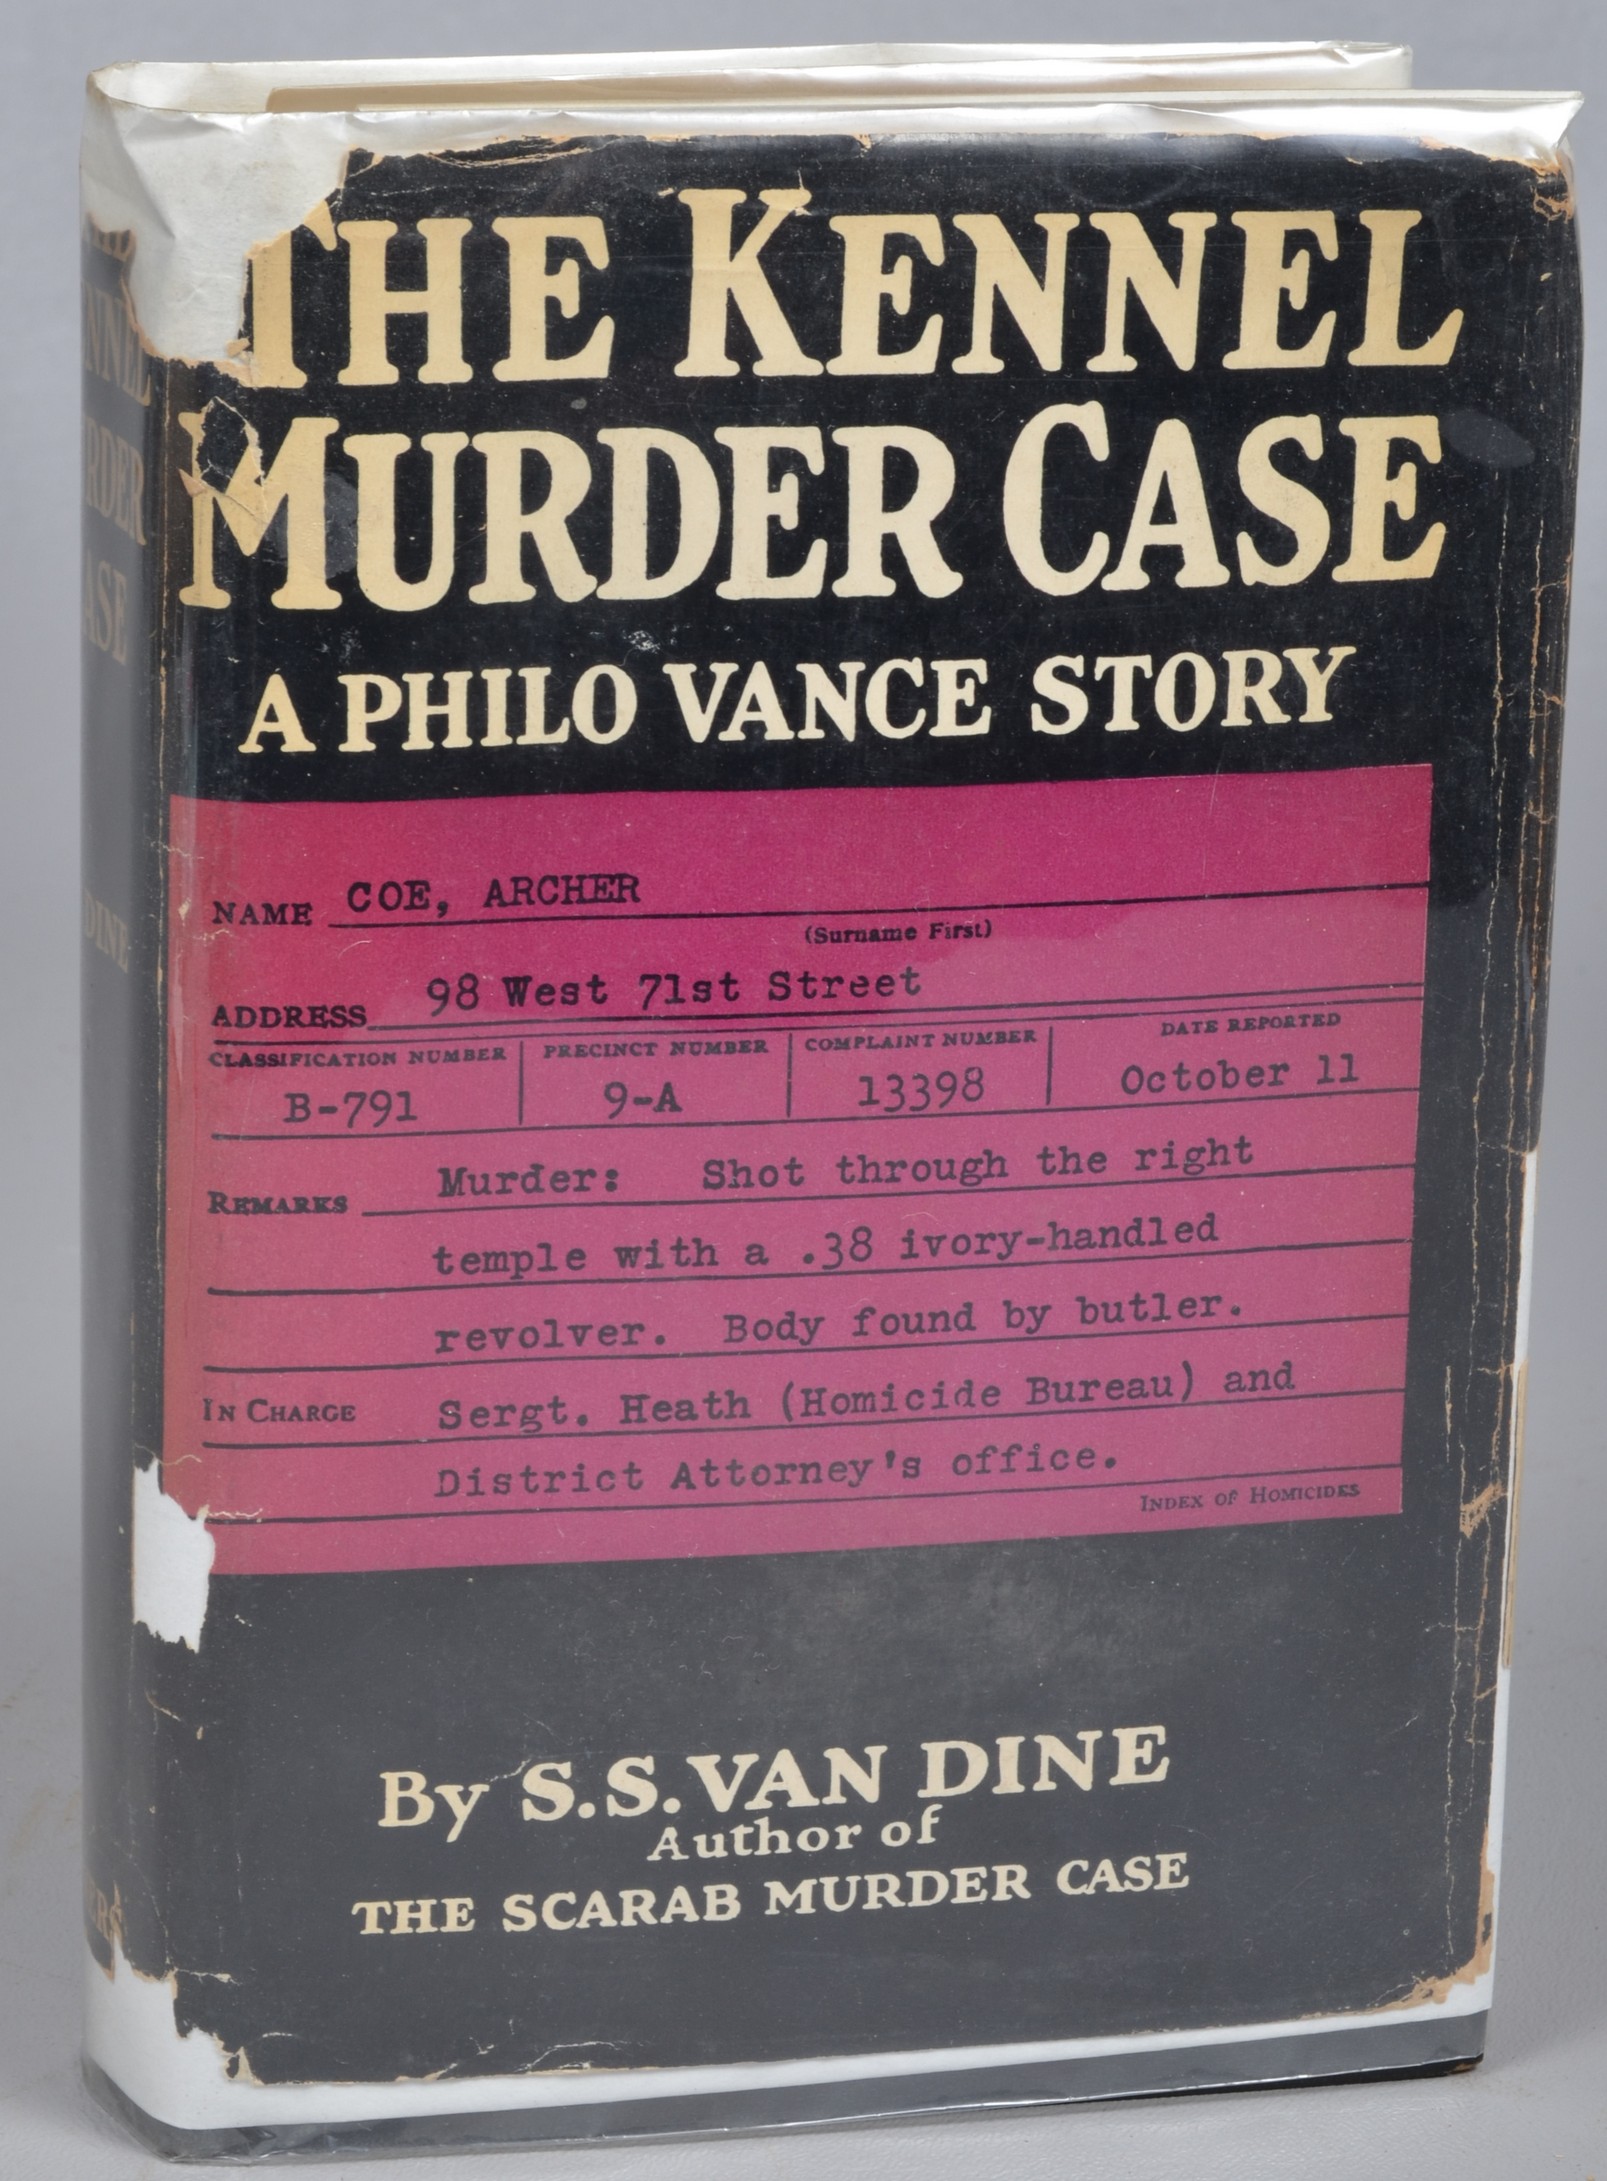 The Kennel Murder Case, first edition,